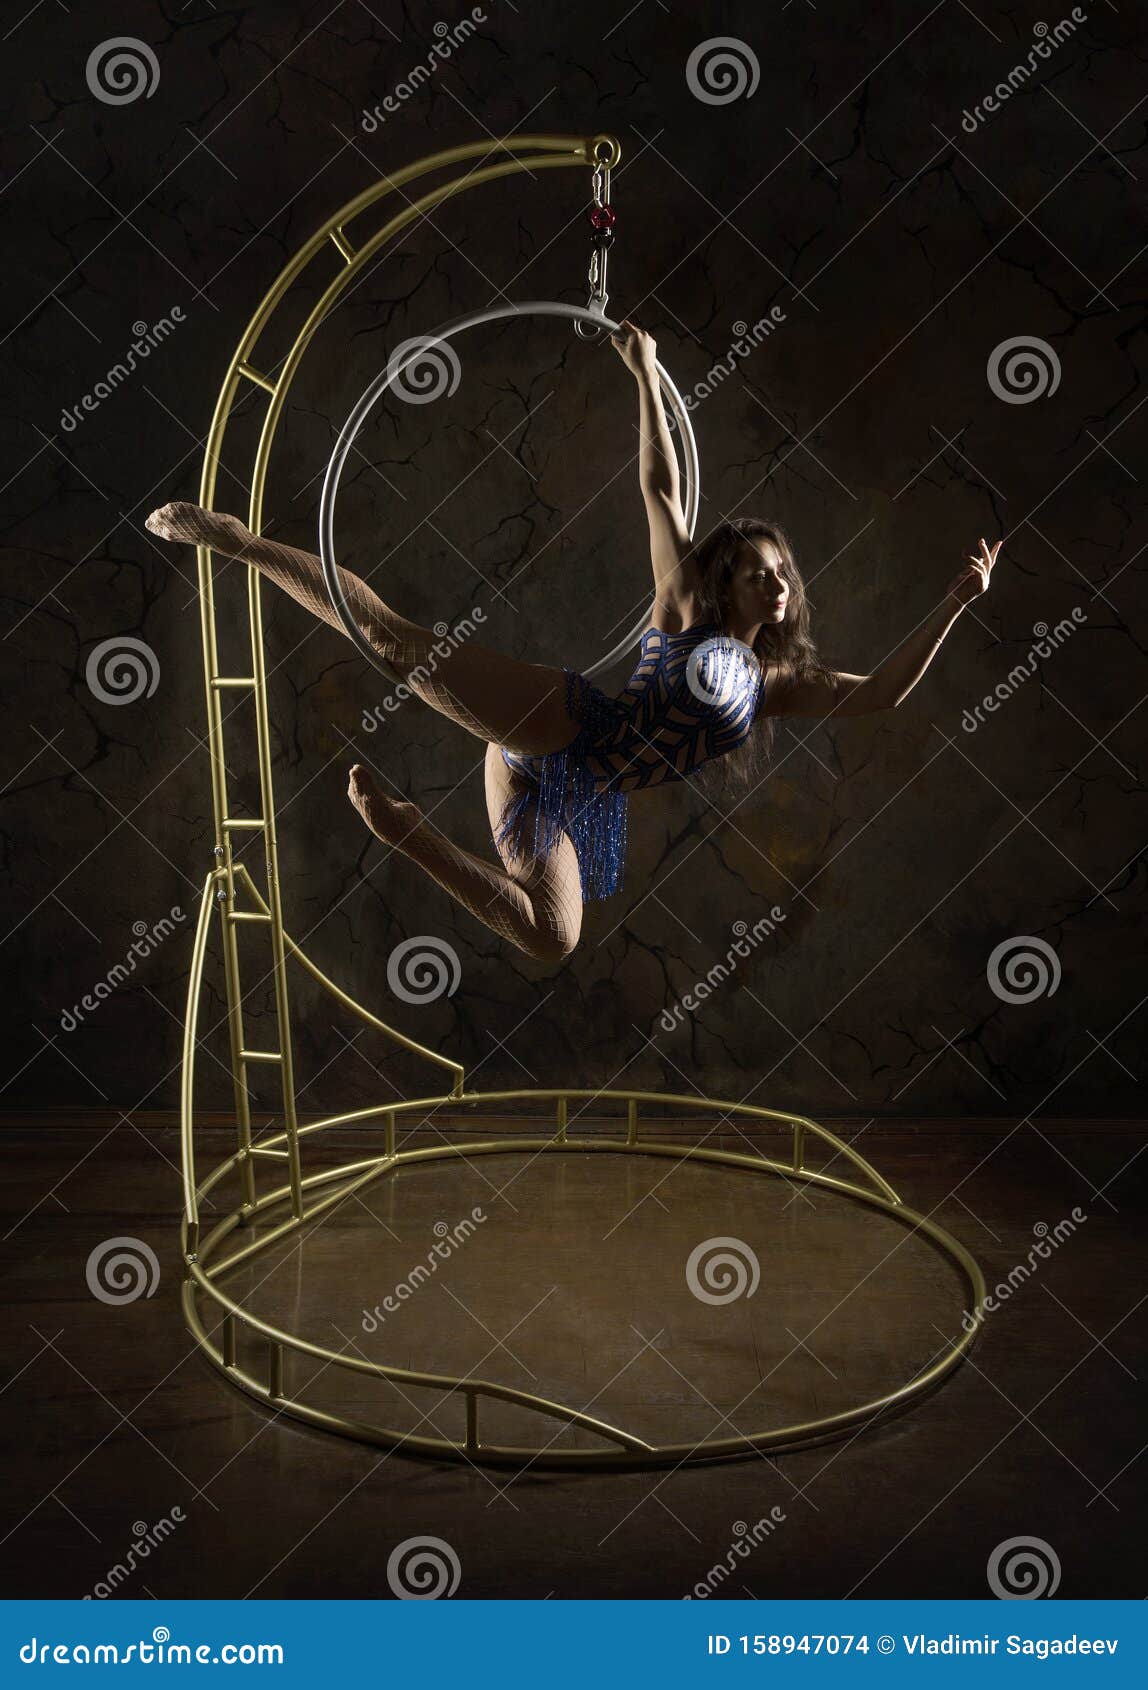 gorgeous girl aerial acrobatics stage blue dress takes acrobatic elements portable air ring lighting studio shooting 158947074